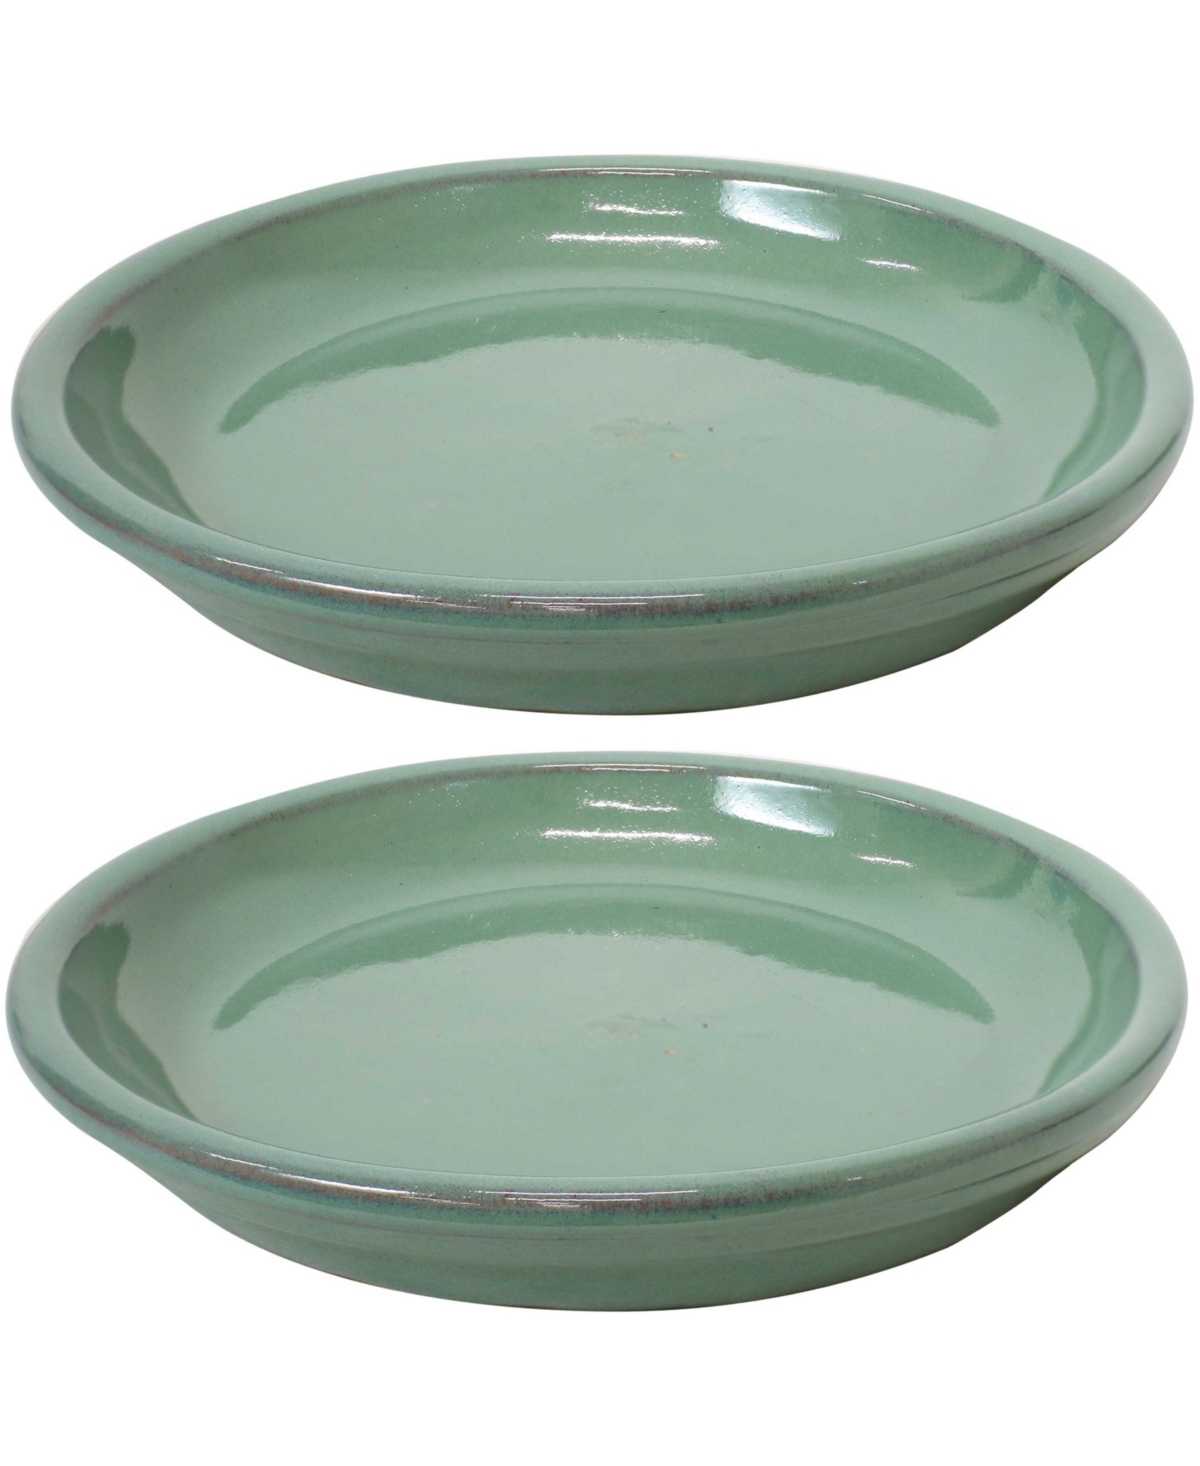 7 in Glazed Ceramic Flower Pot/Plant Saucer - Seafoam - Set of 2 - Light green